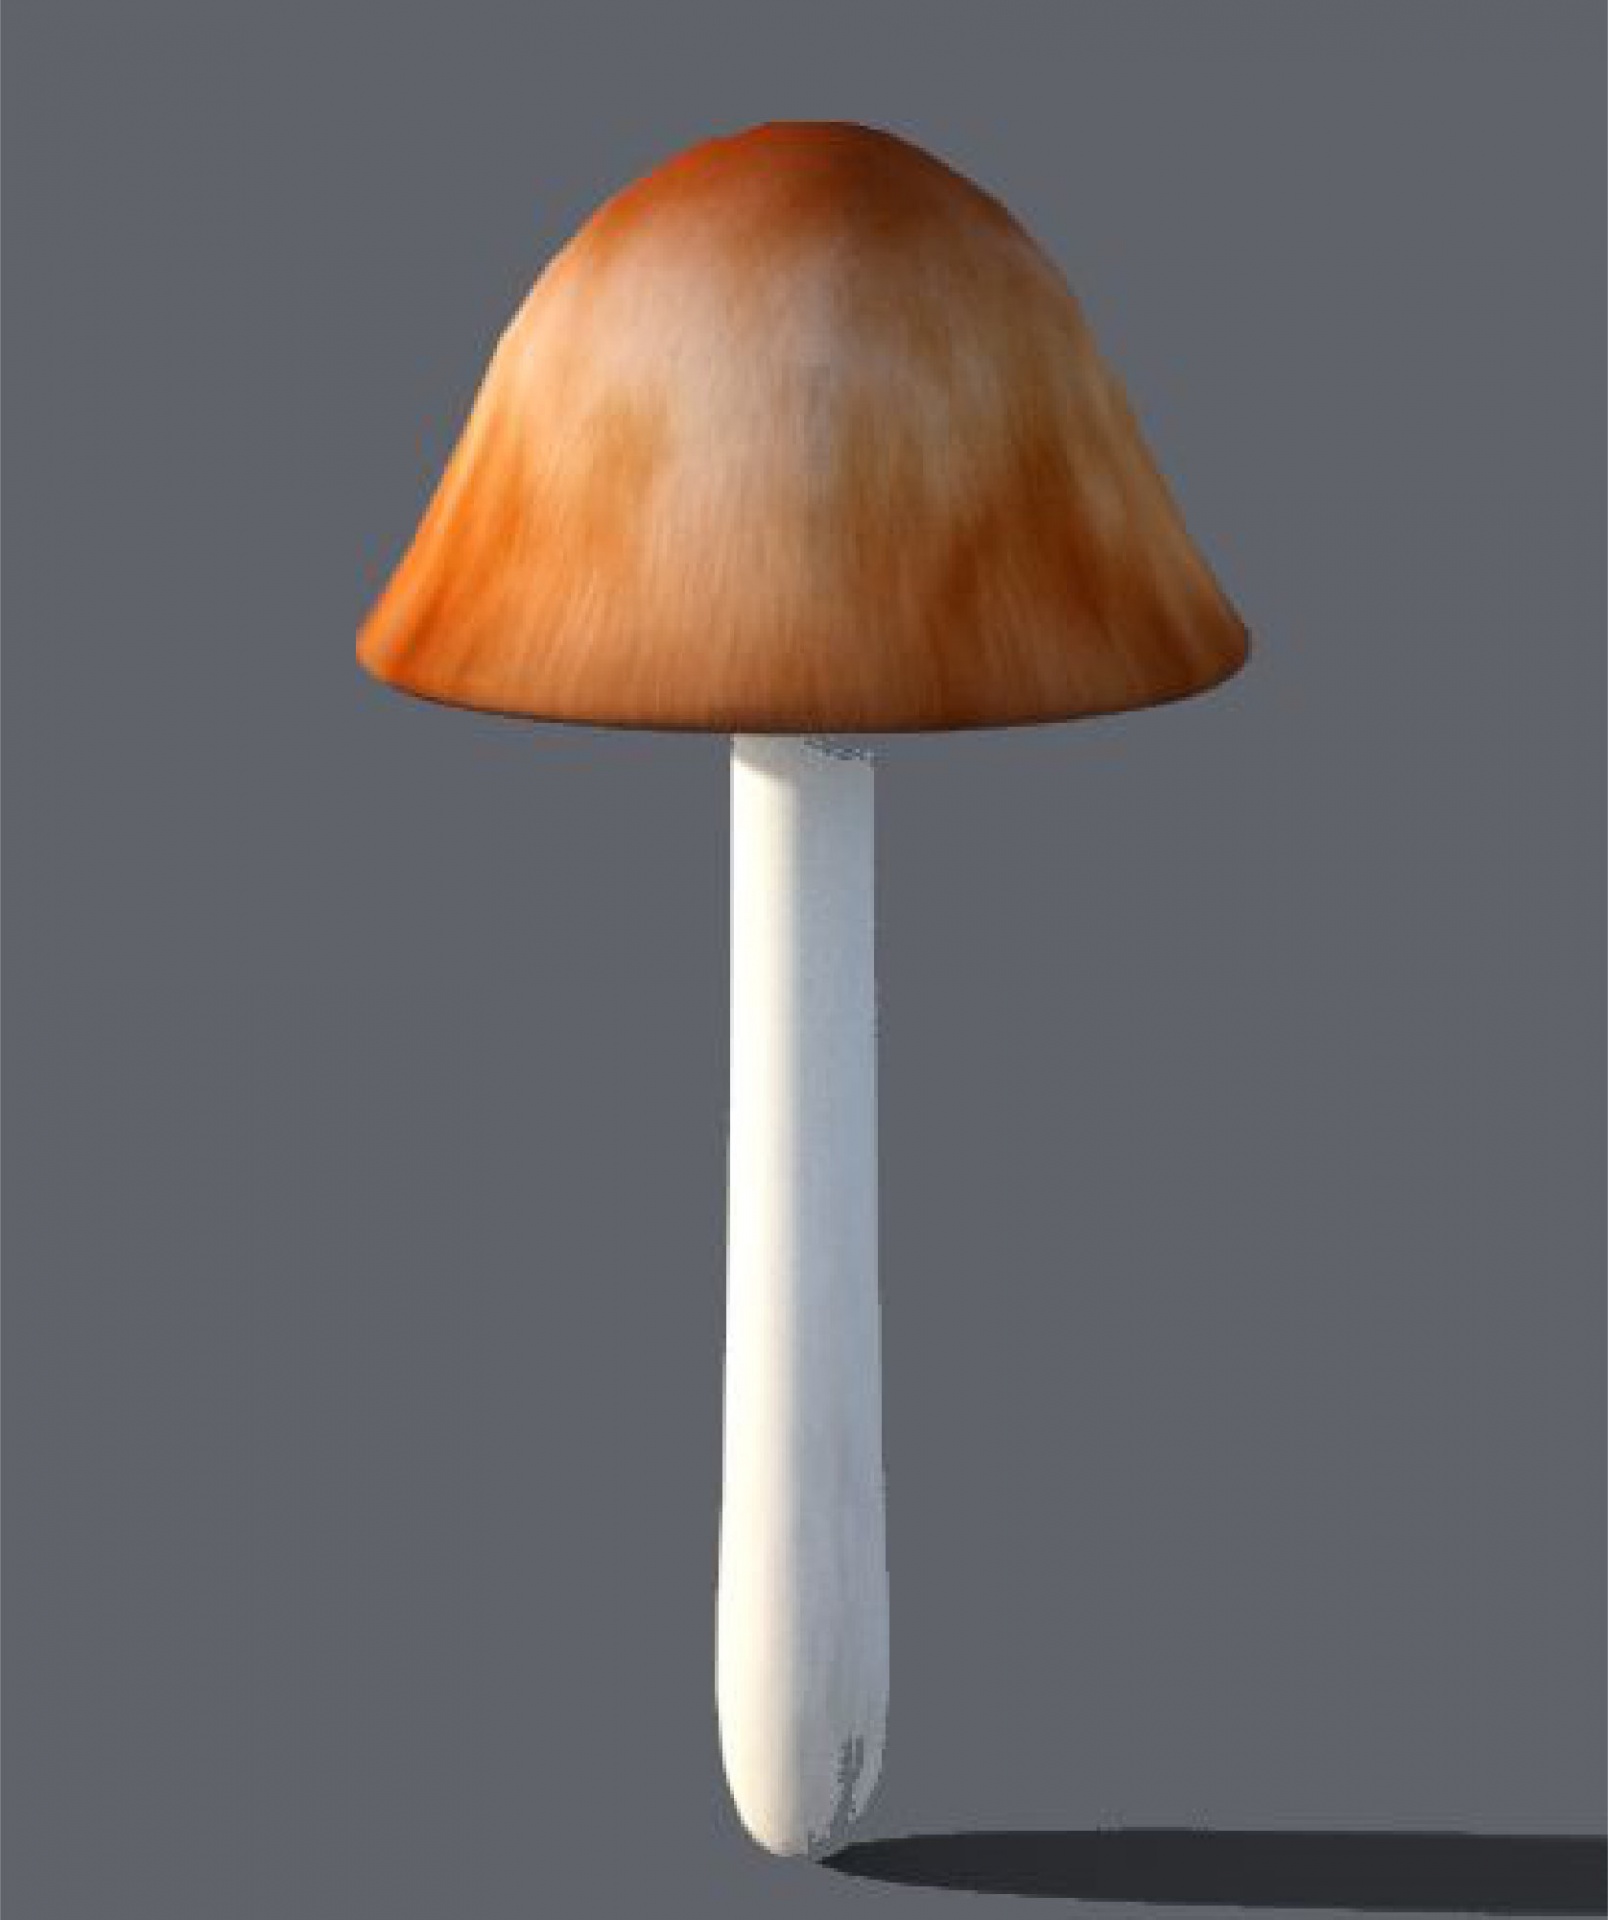 drawing brown mushroom free photo